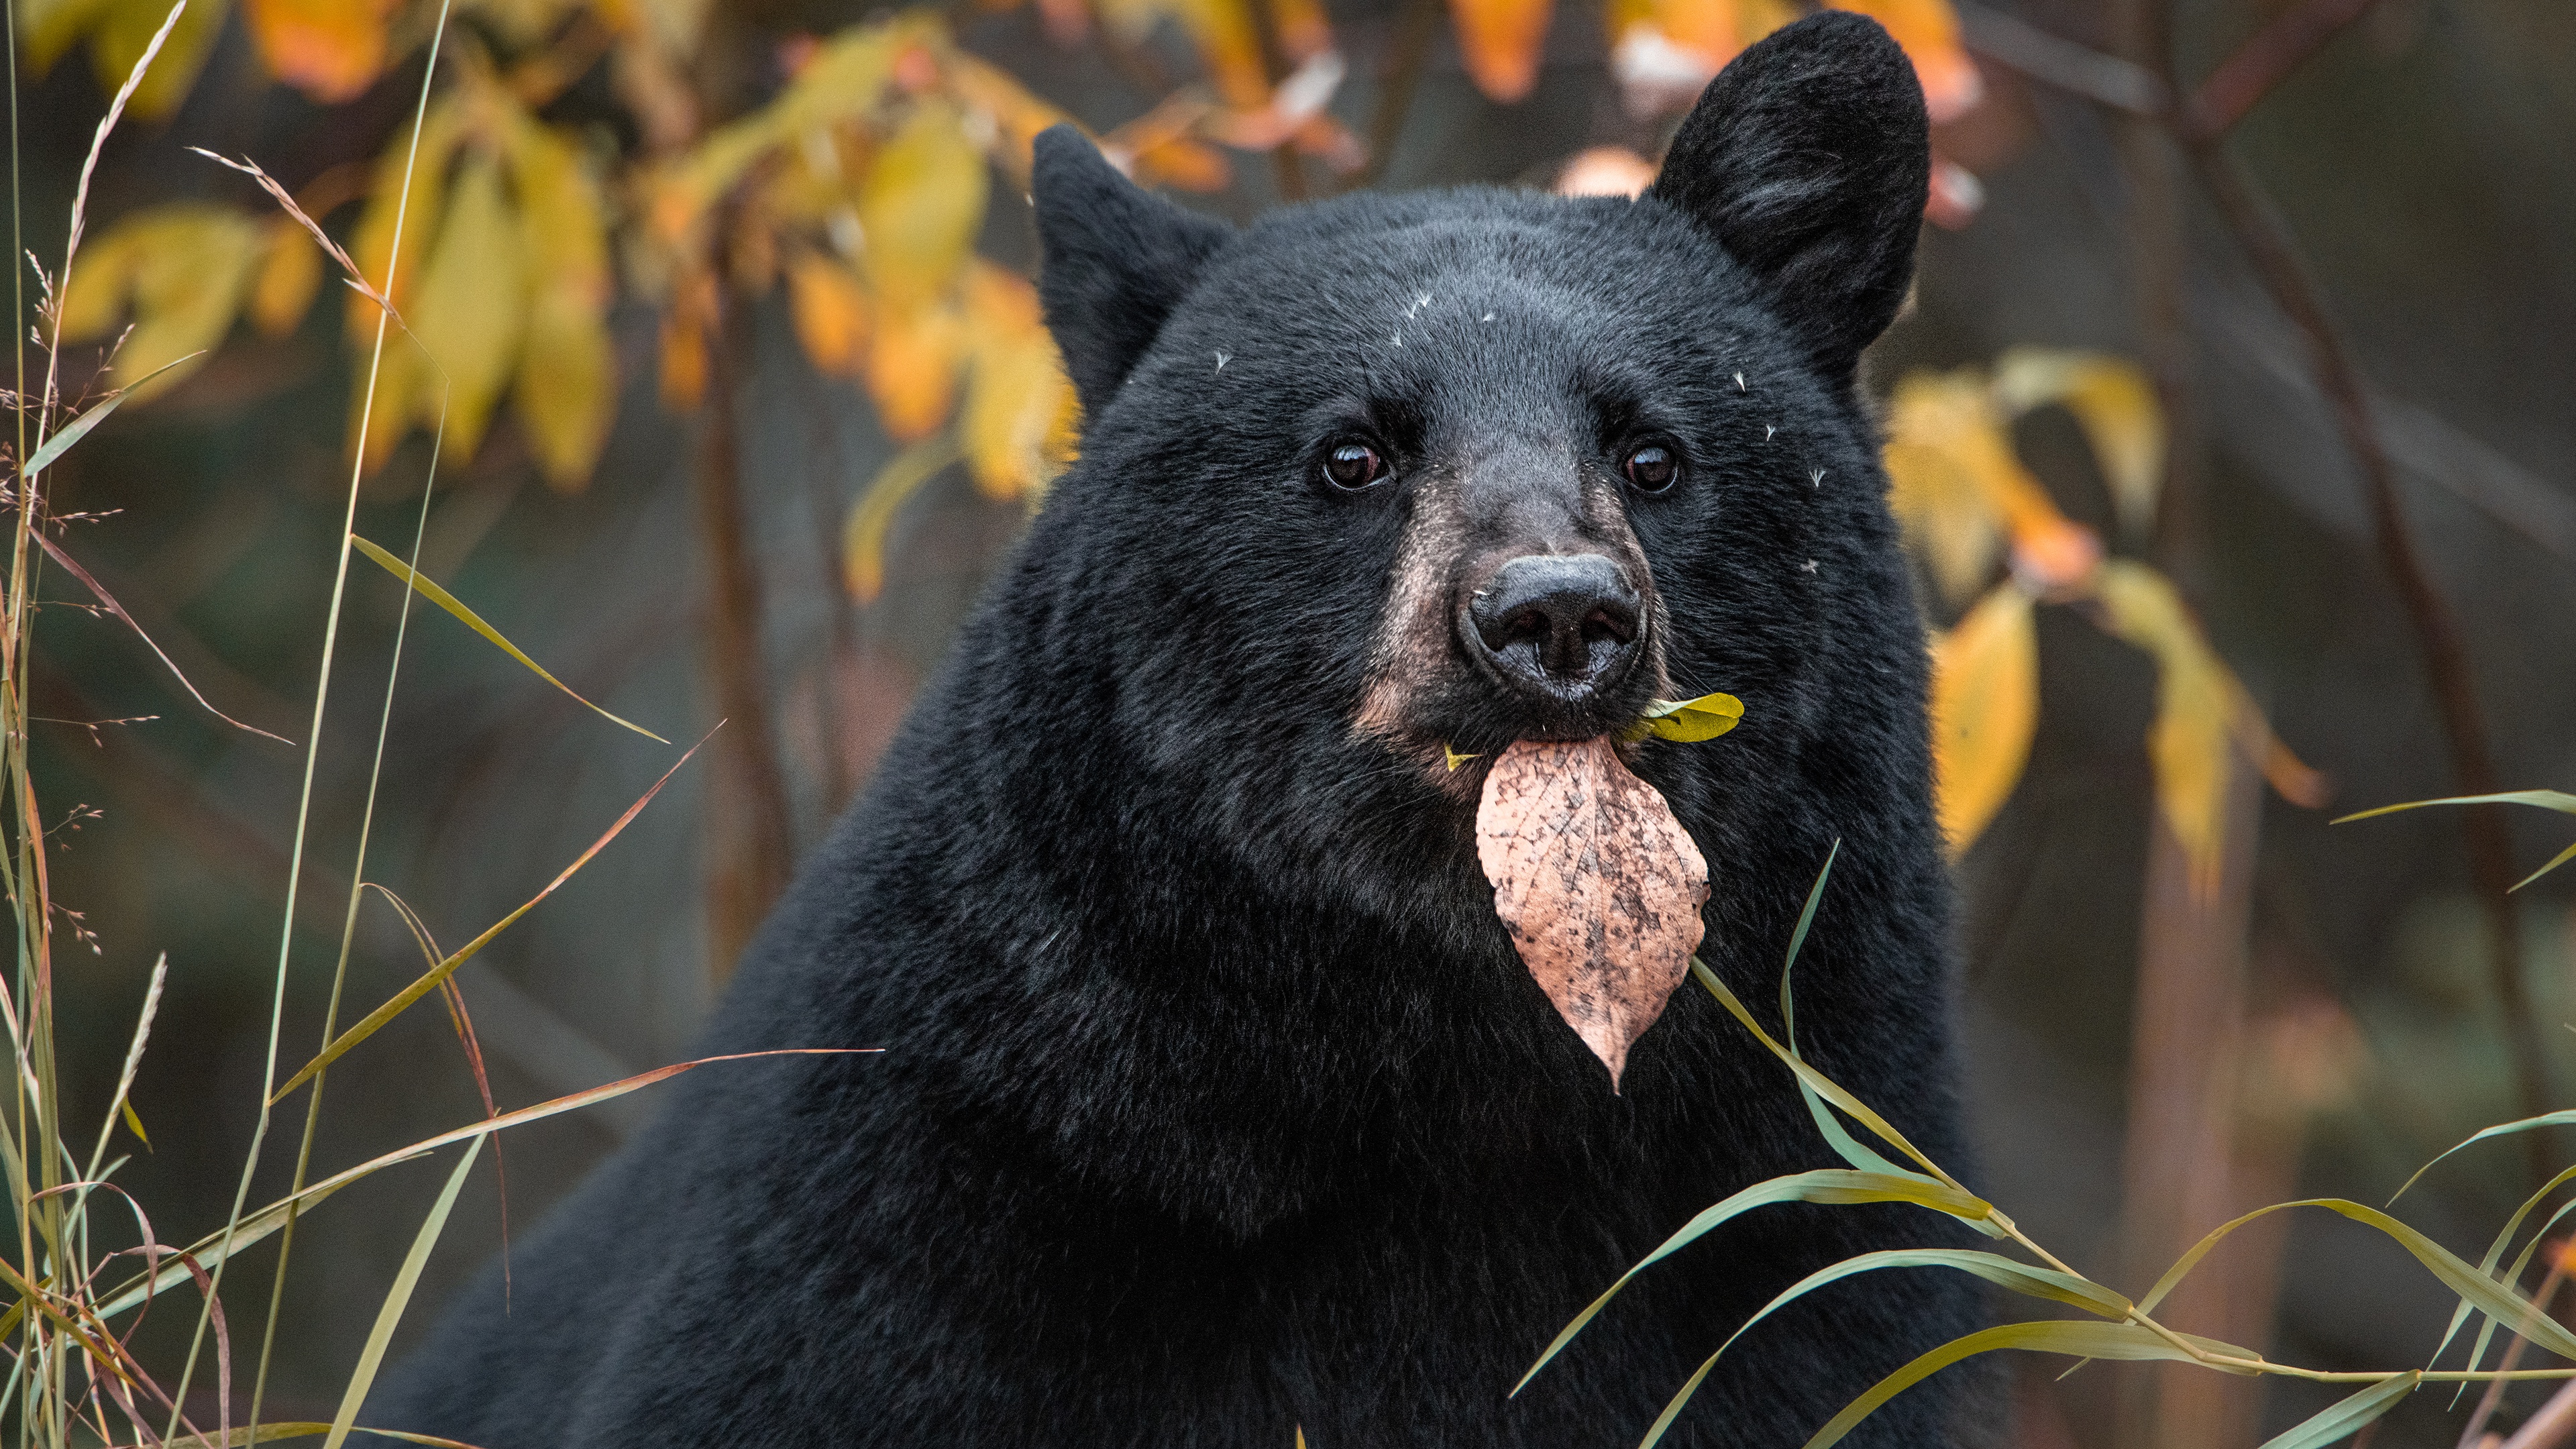 Медведь барибал умеет лазить по деревьям. Барибал и бурый медведь. Американский черный медведь Барибал. Бурый Барибал. Барибал Северной Америки.